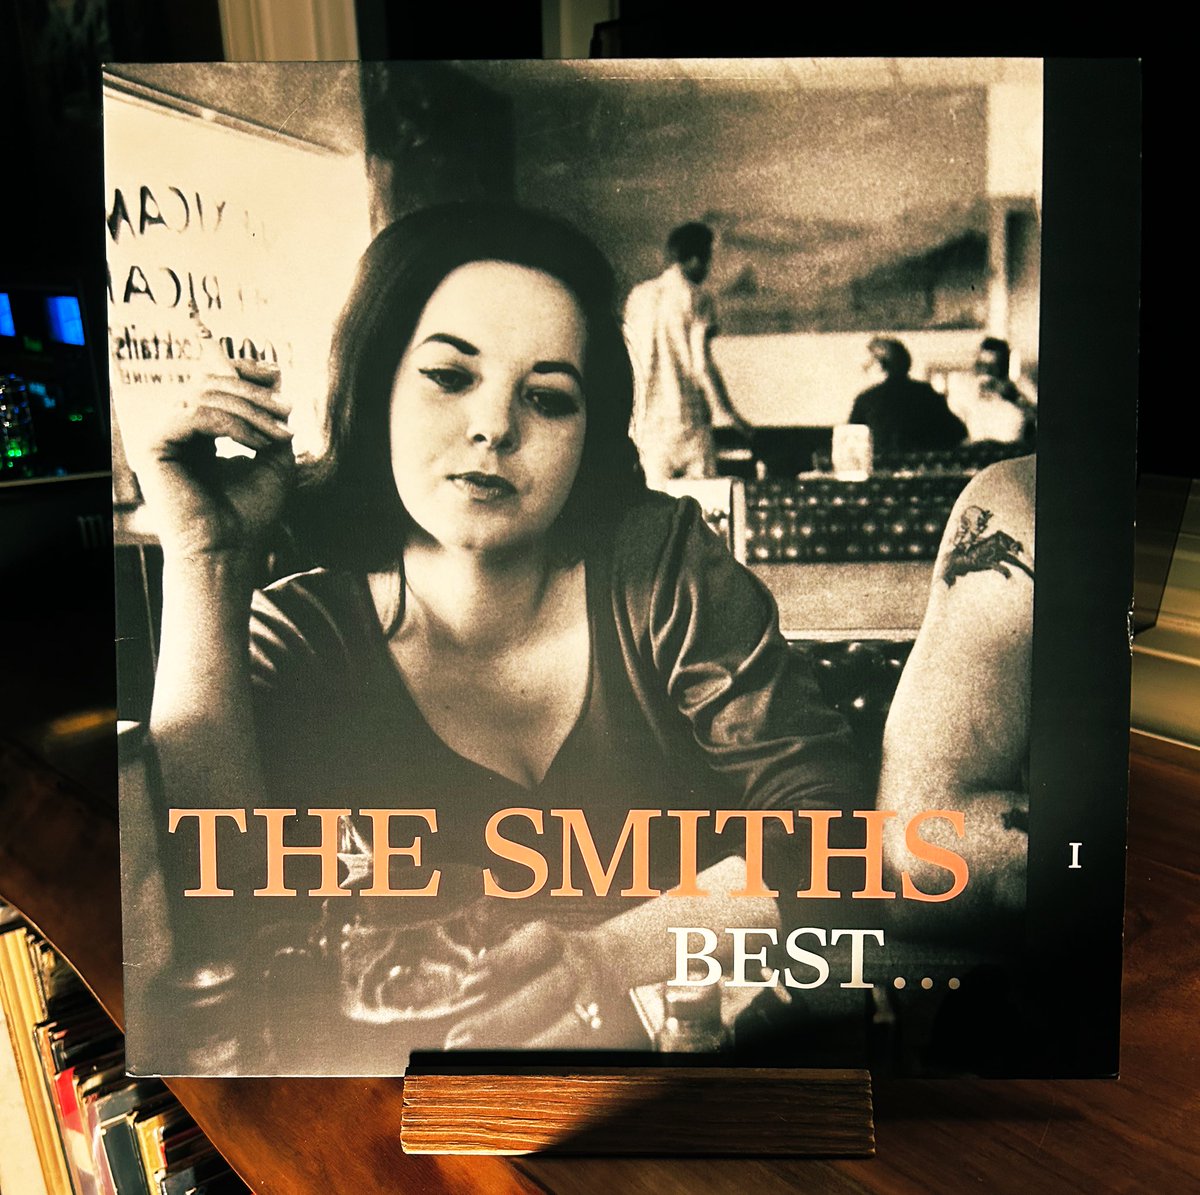 THE SMITHS
BEST…
#THESMITHS